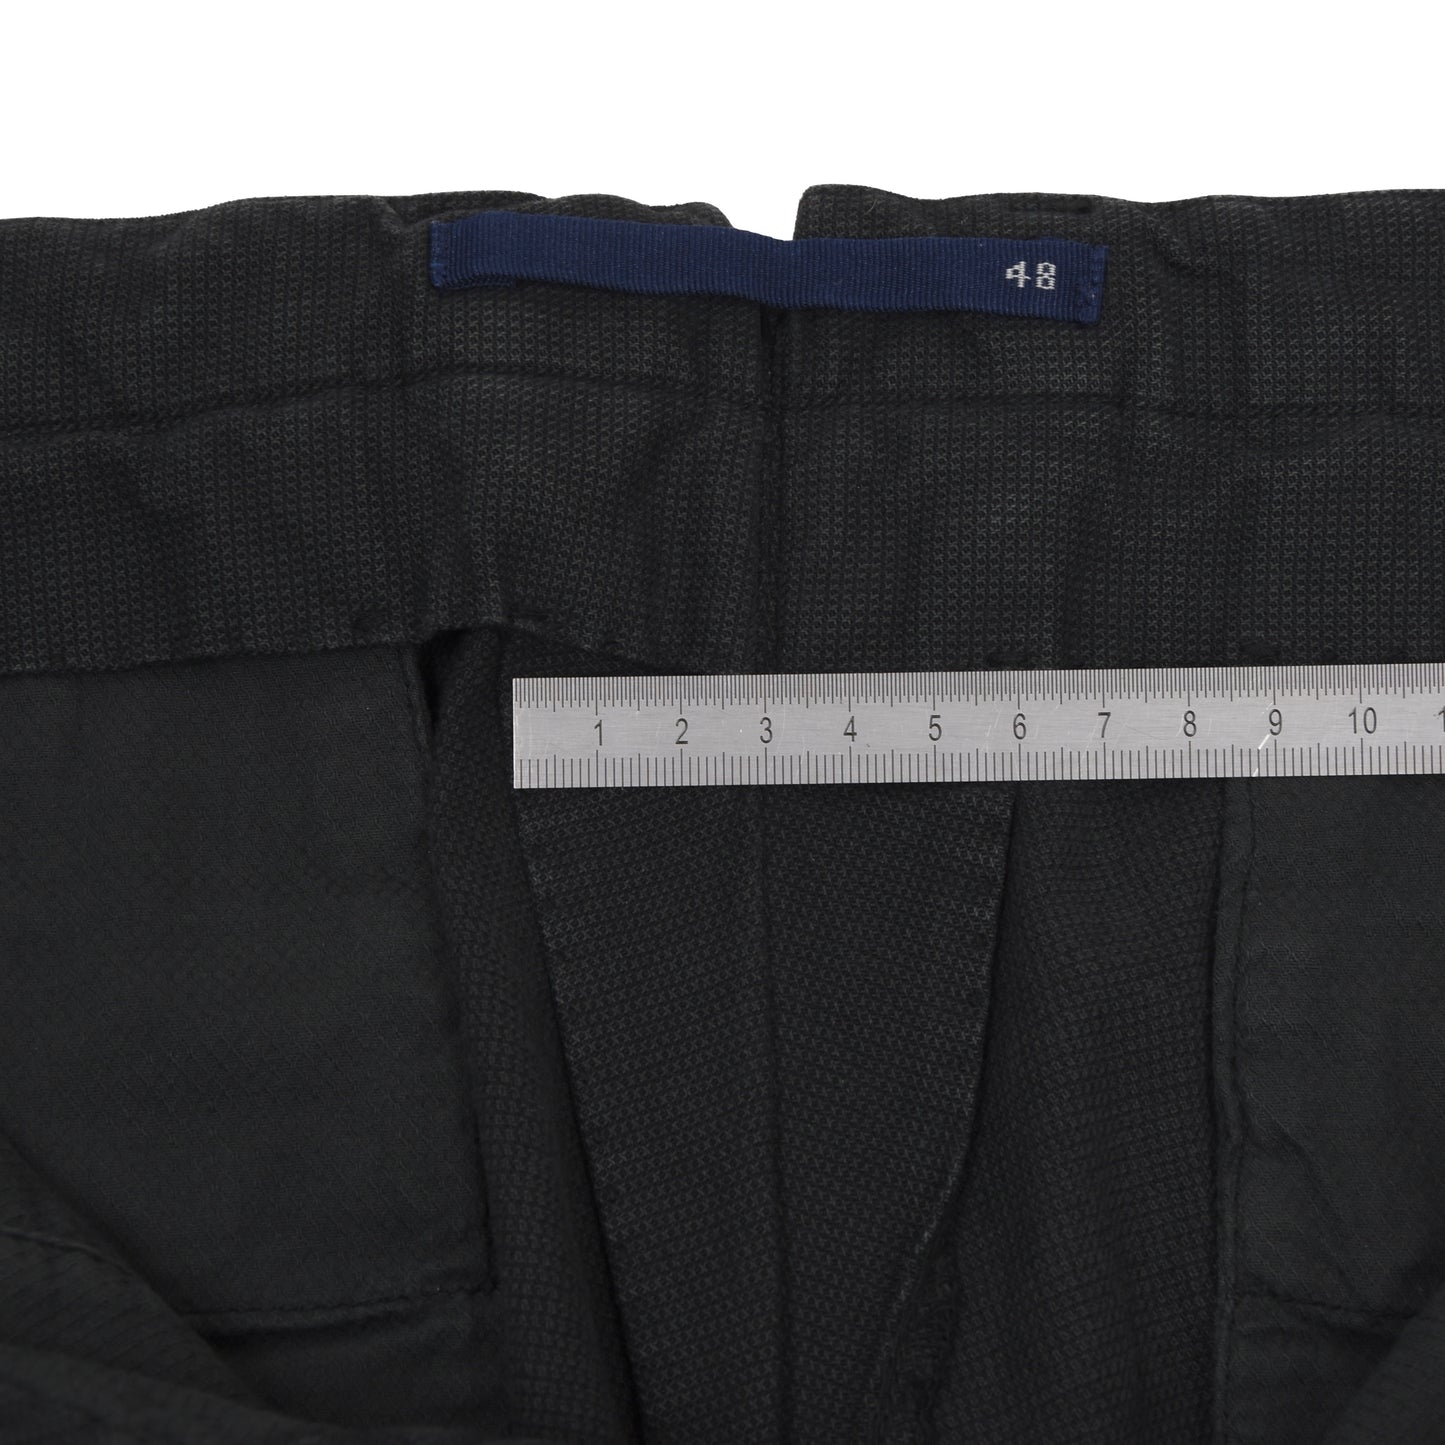 Incotex Skin Fit Cotton Pants Size 48 - Charcoal